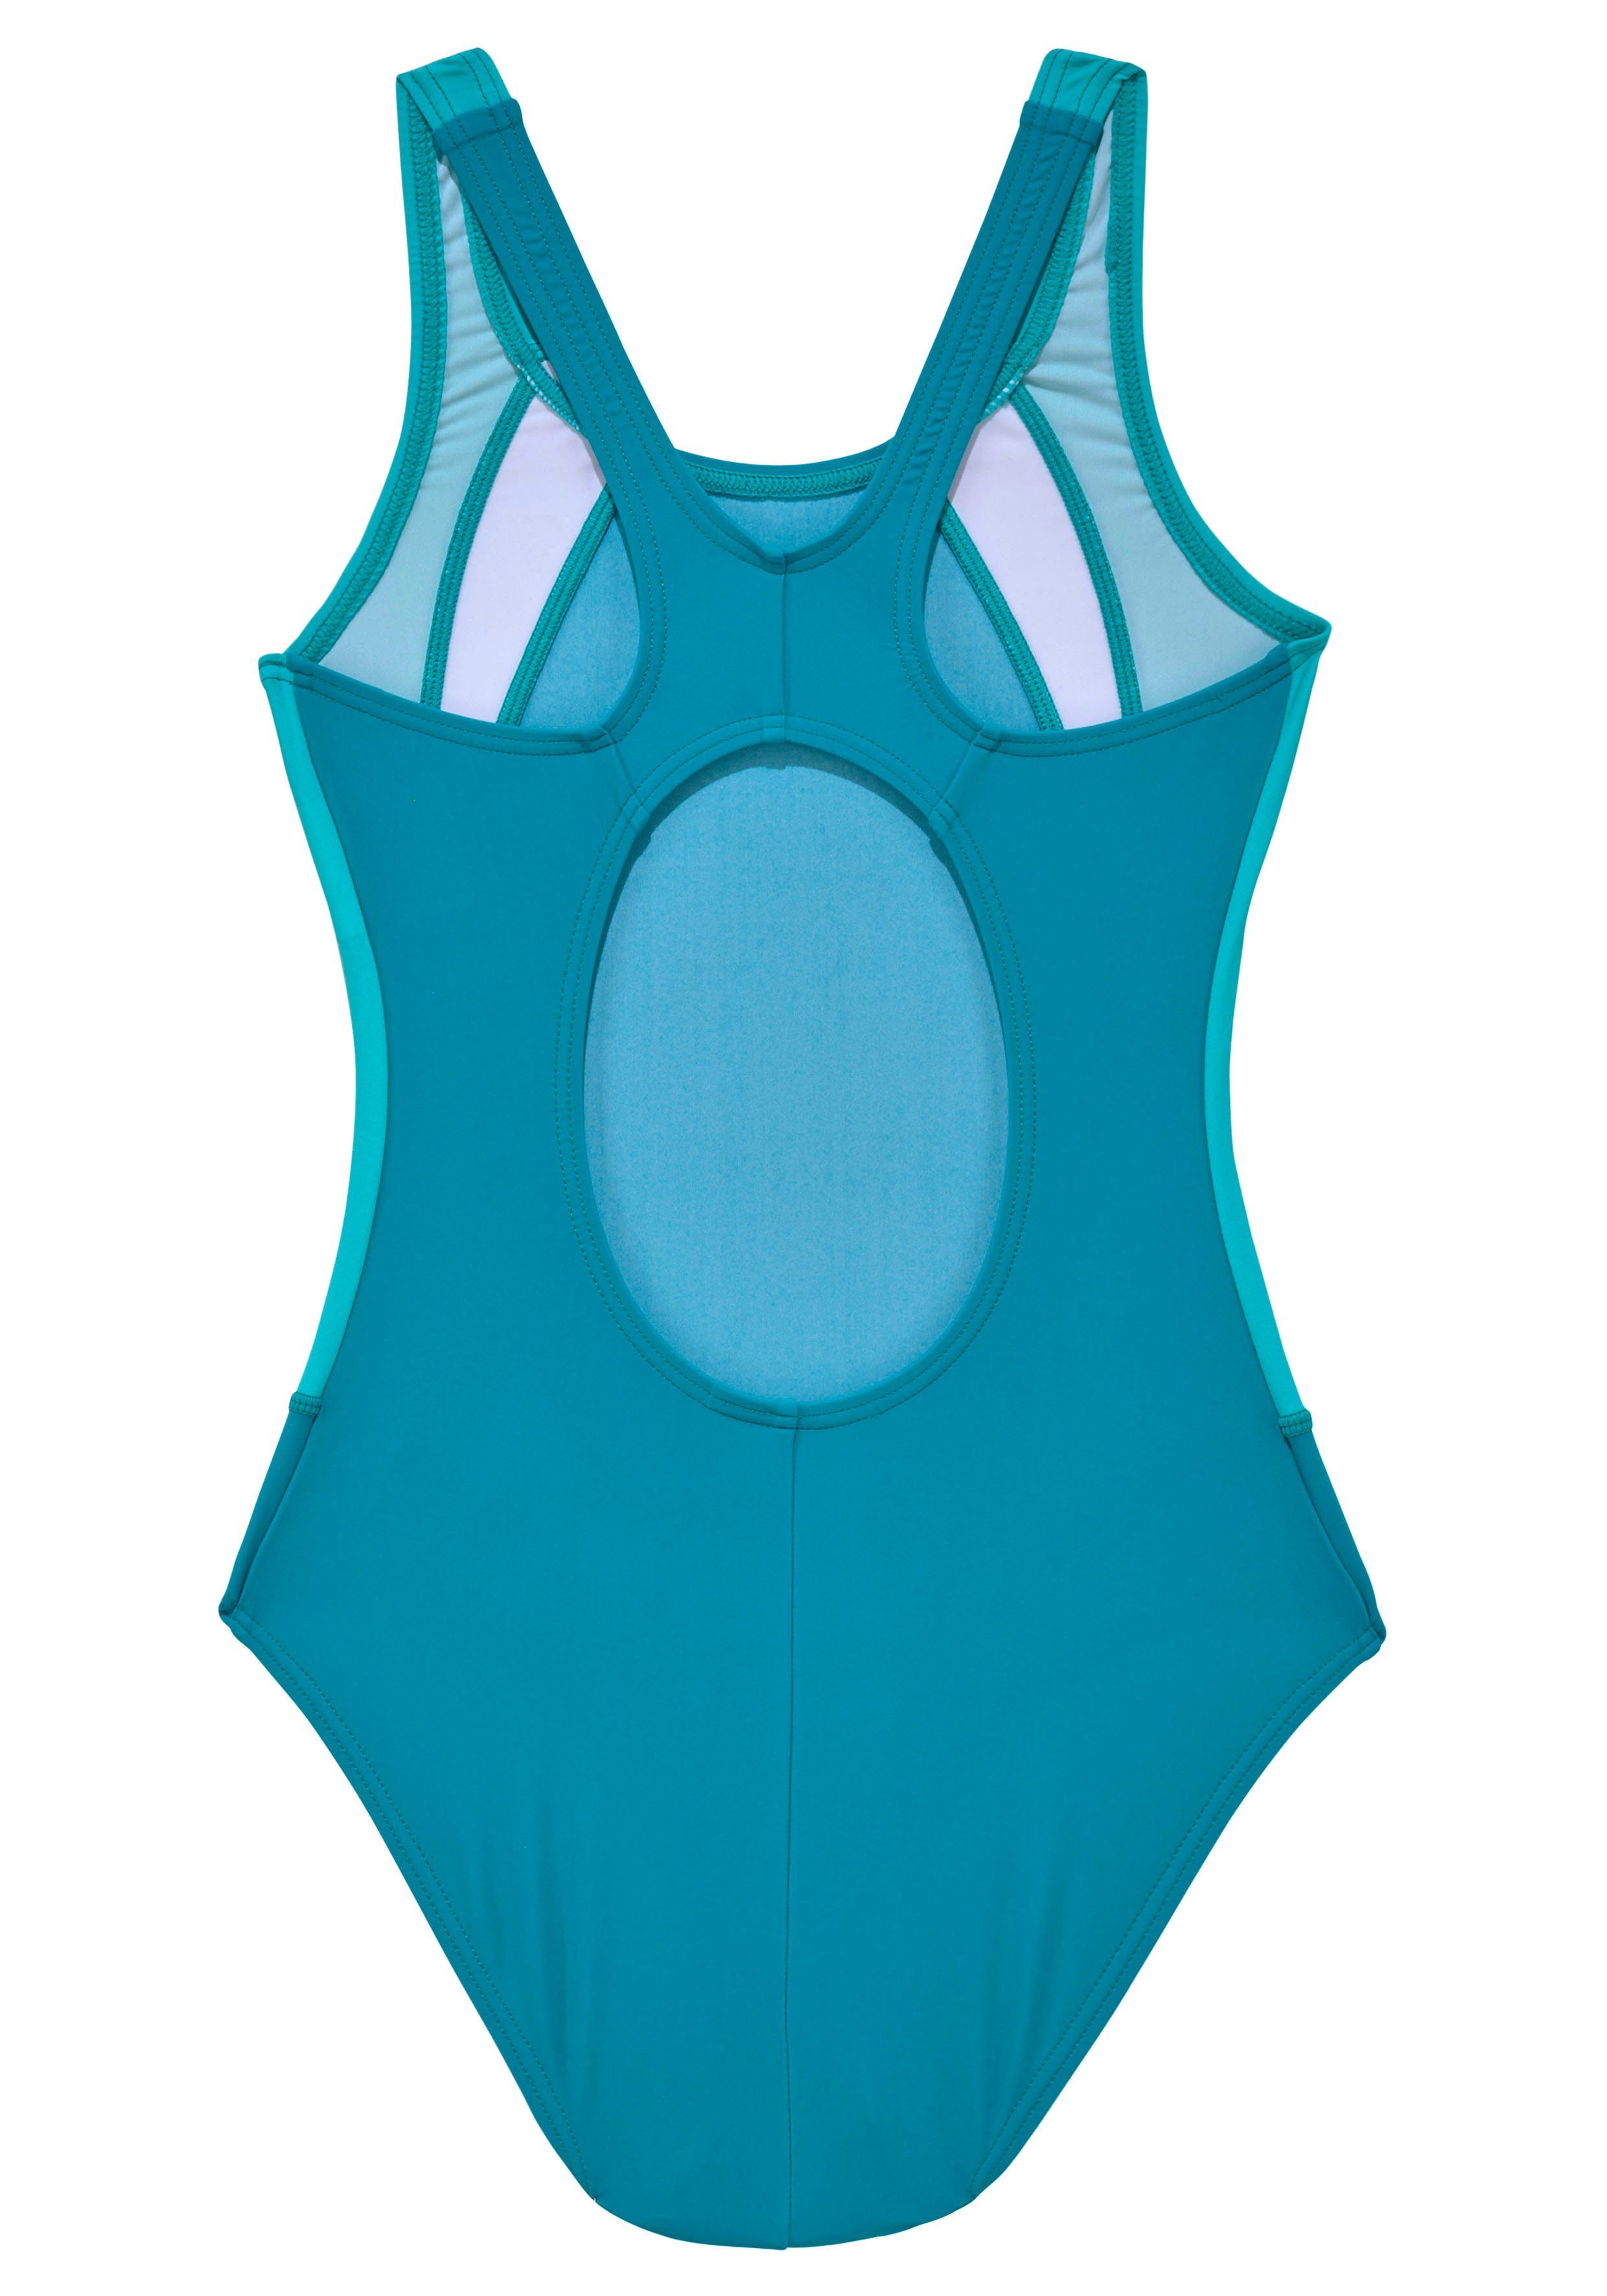 KangaROOS Badeanzug im sportlichen Farbmix türkis-blau